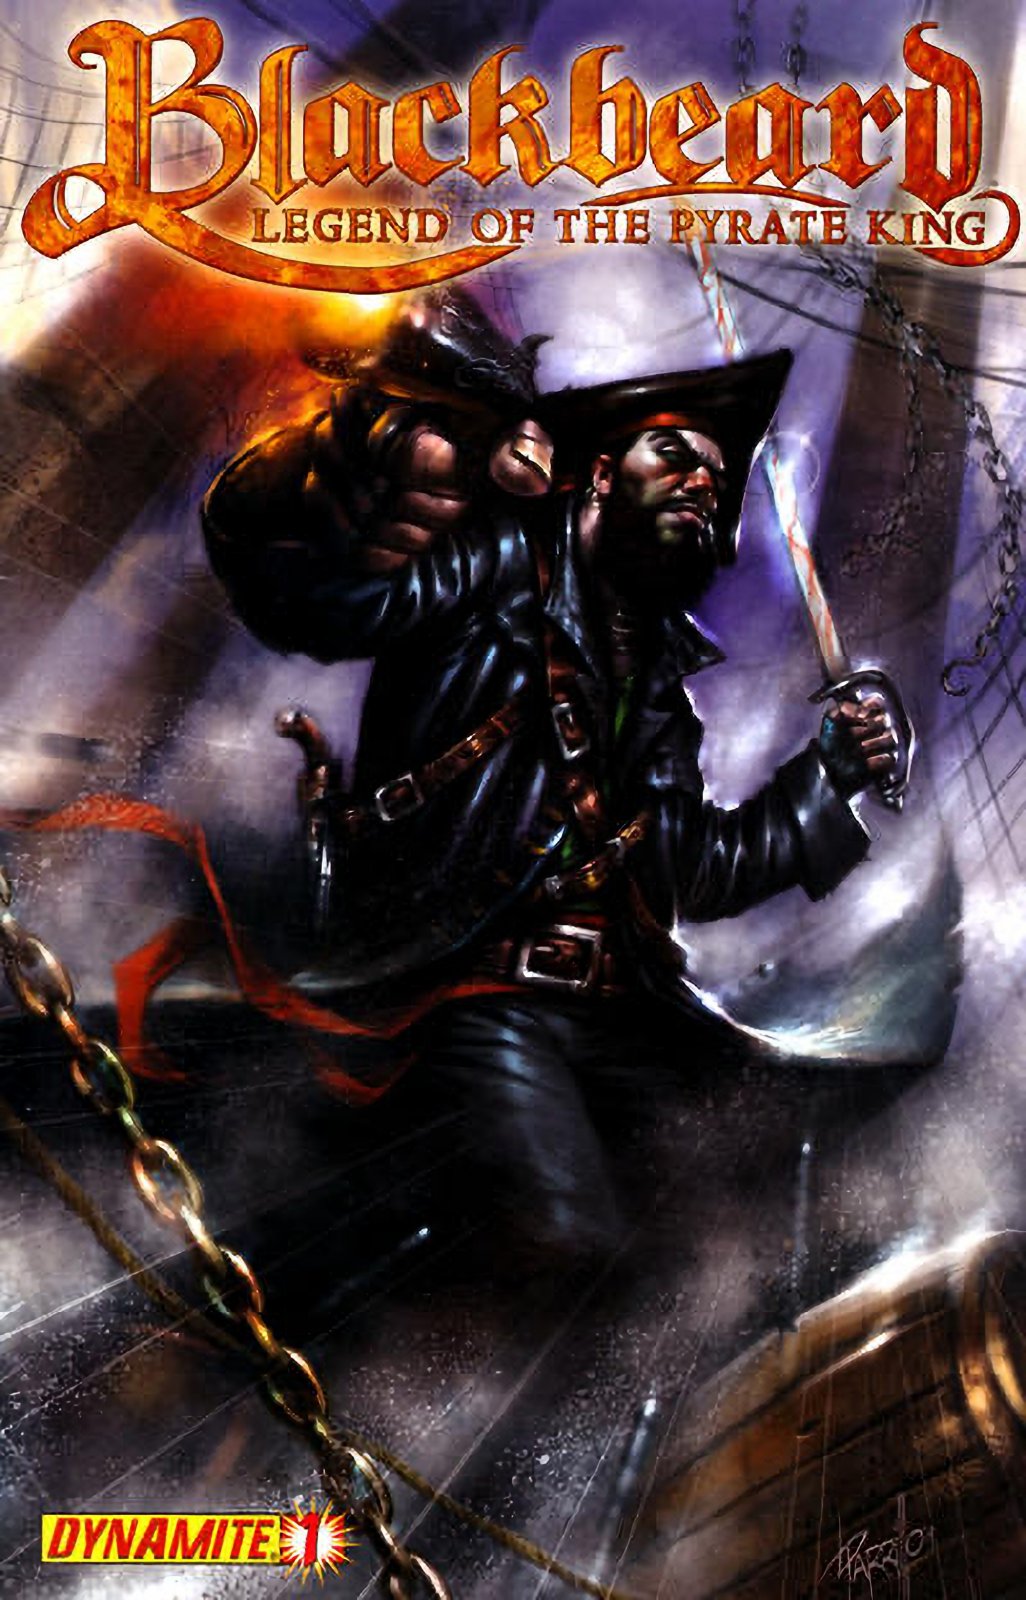 Blackbeard: Legend of the Pyrate King #1B (2009-2010) Dynamite Comics